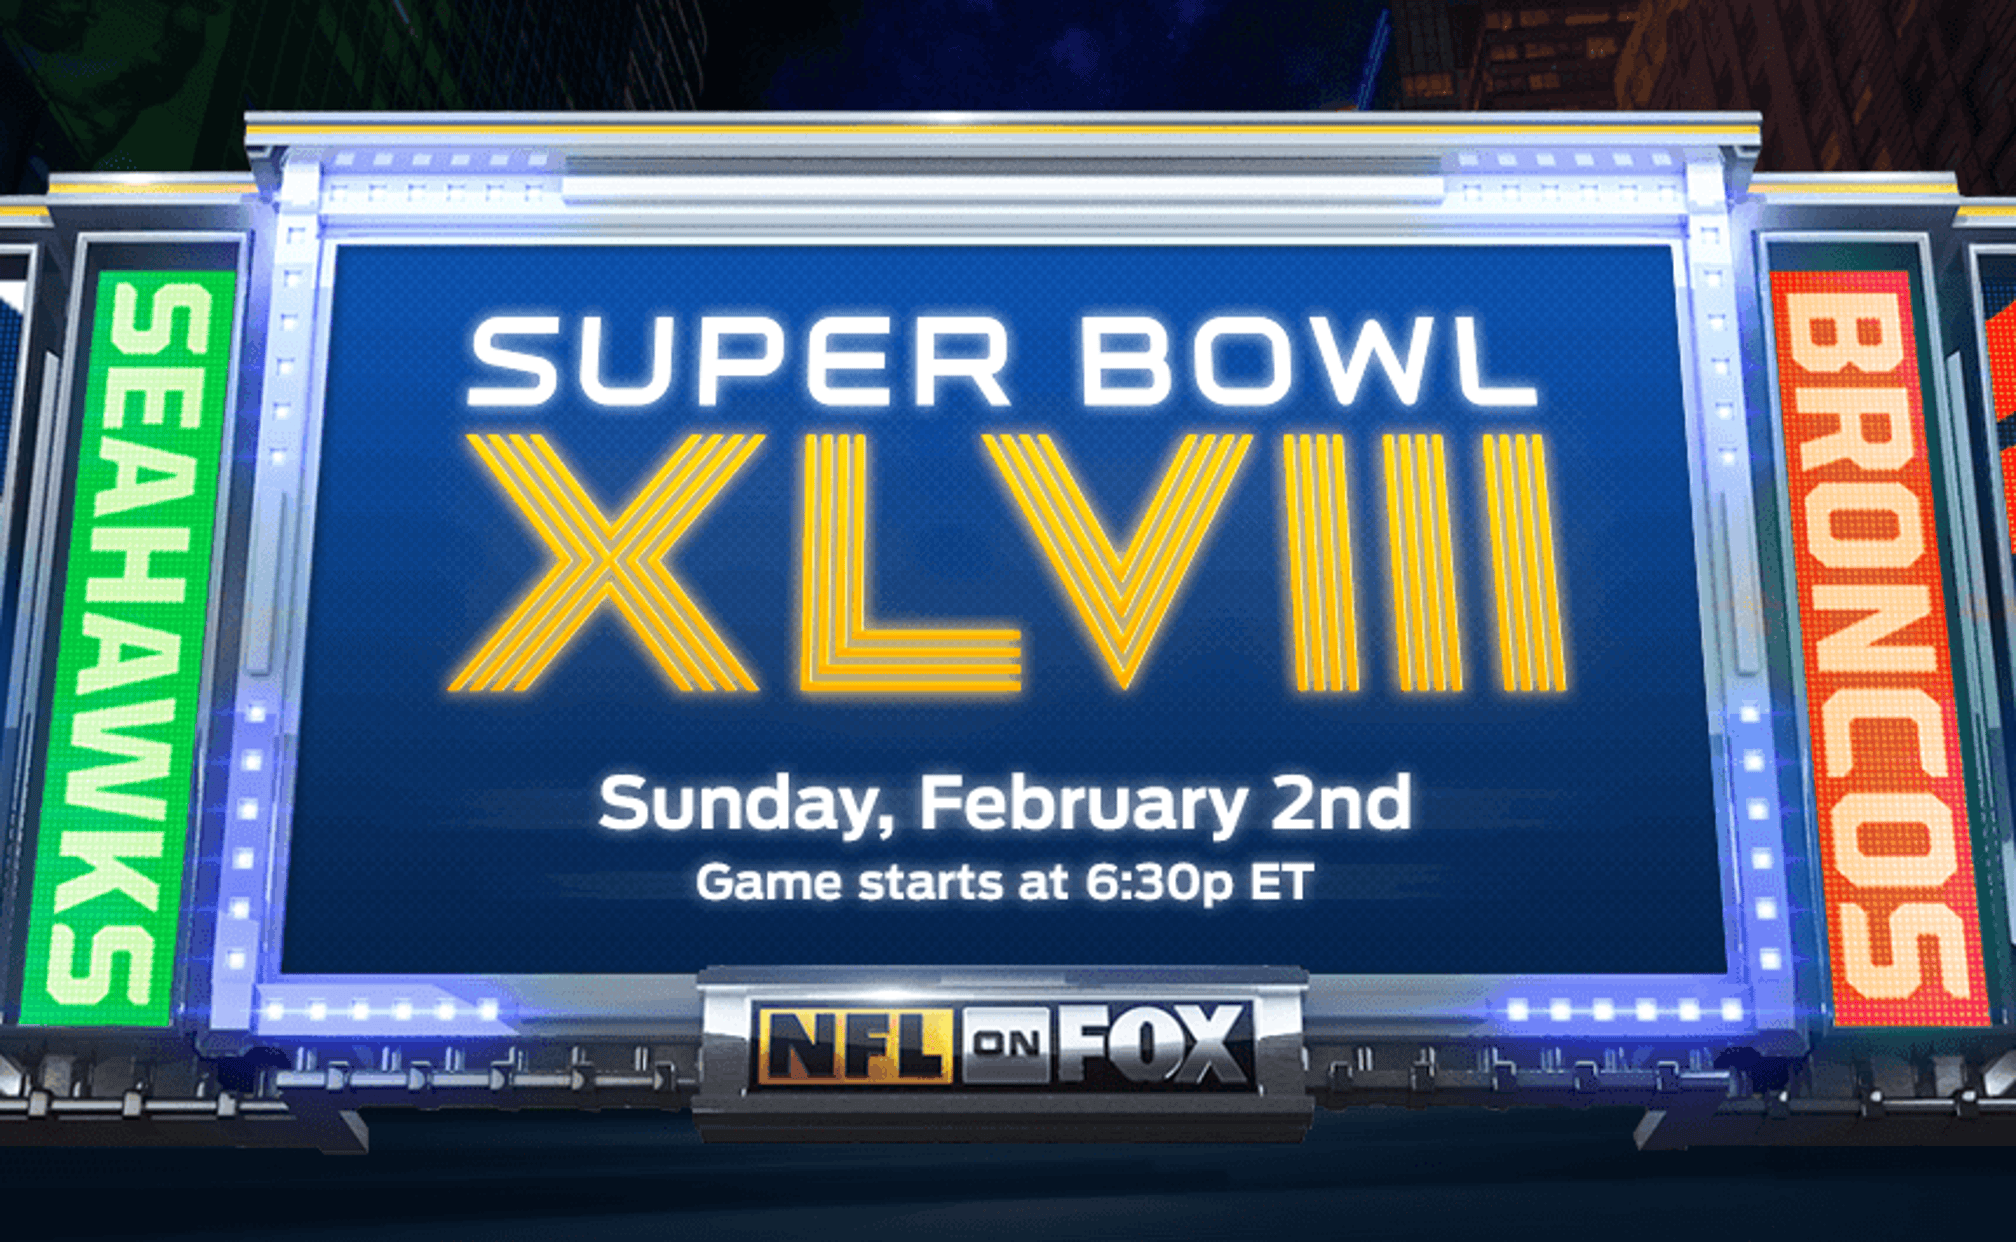 Come back to watch Super Bowl XLVIII on FOX! FOX Sports